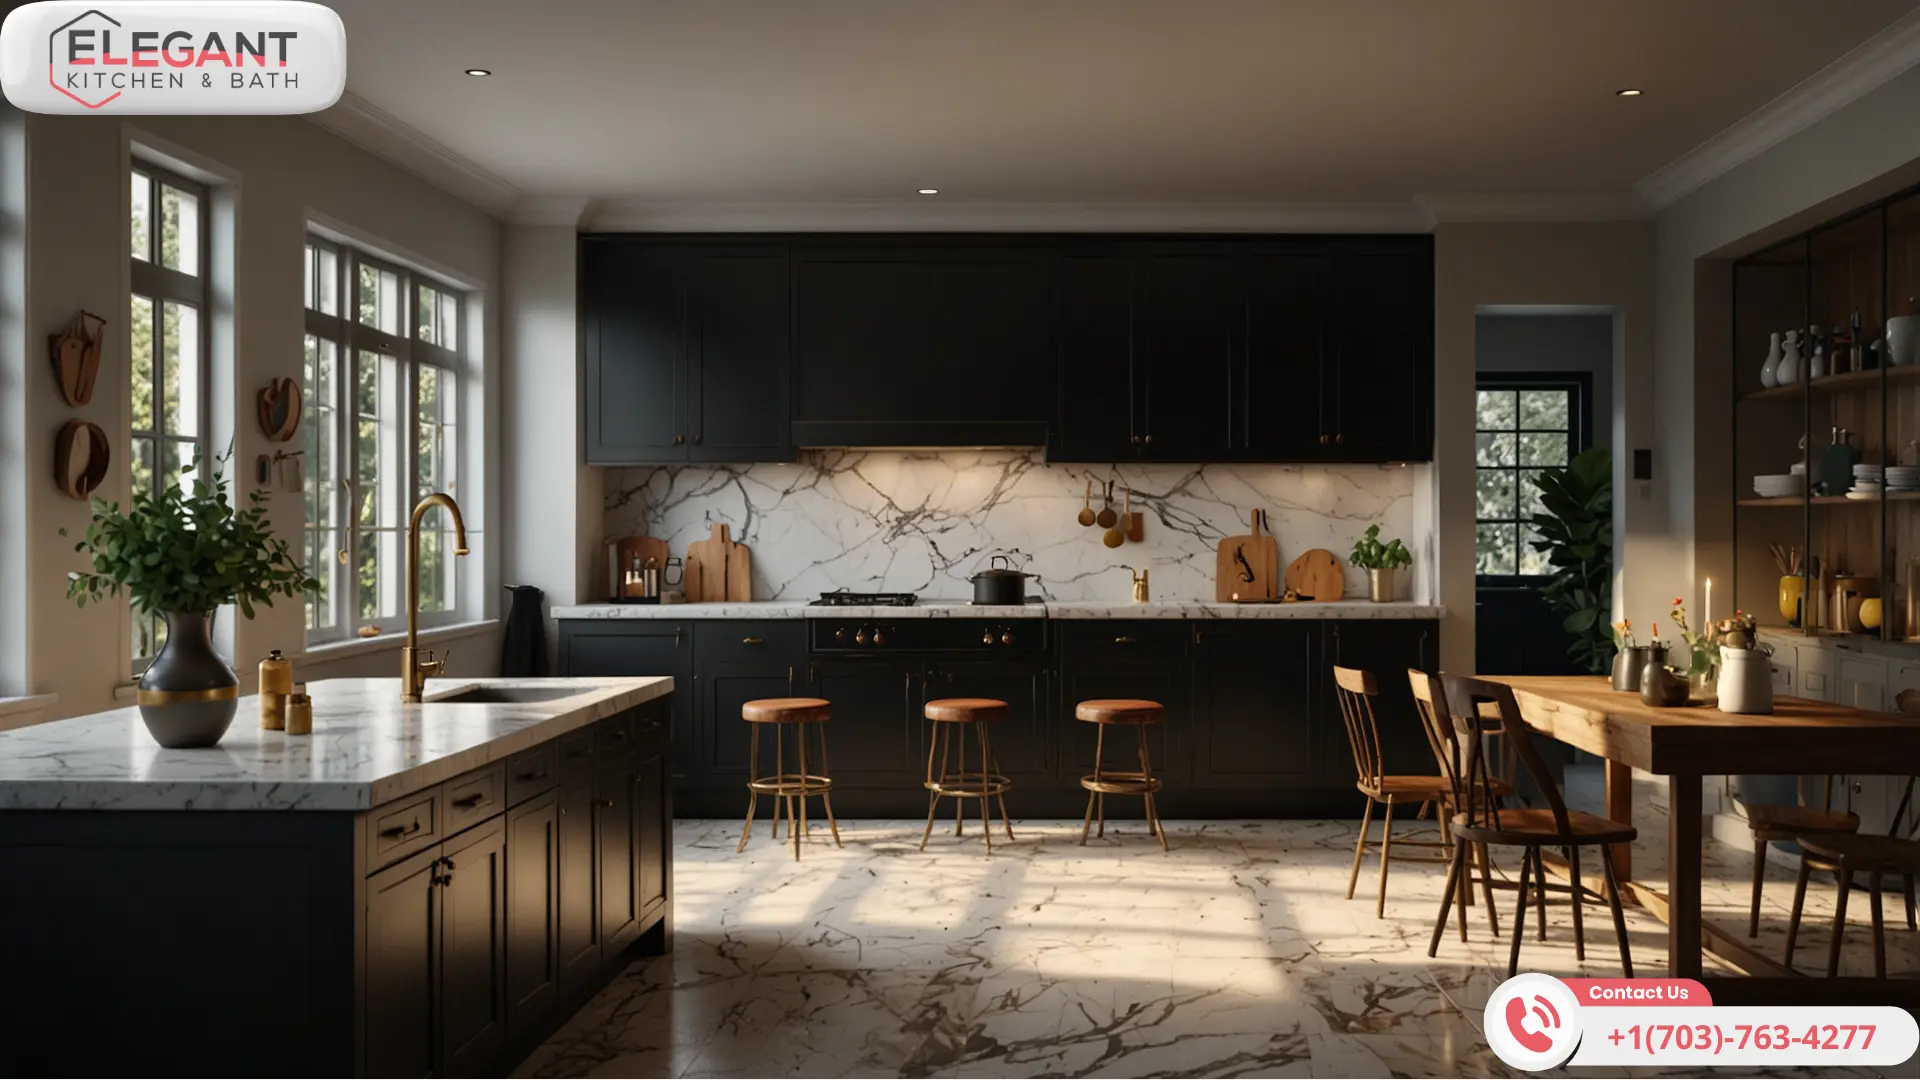 kitchen-backsplash-tiles-with-elegant-kitchen-and-bath